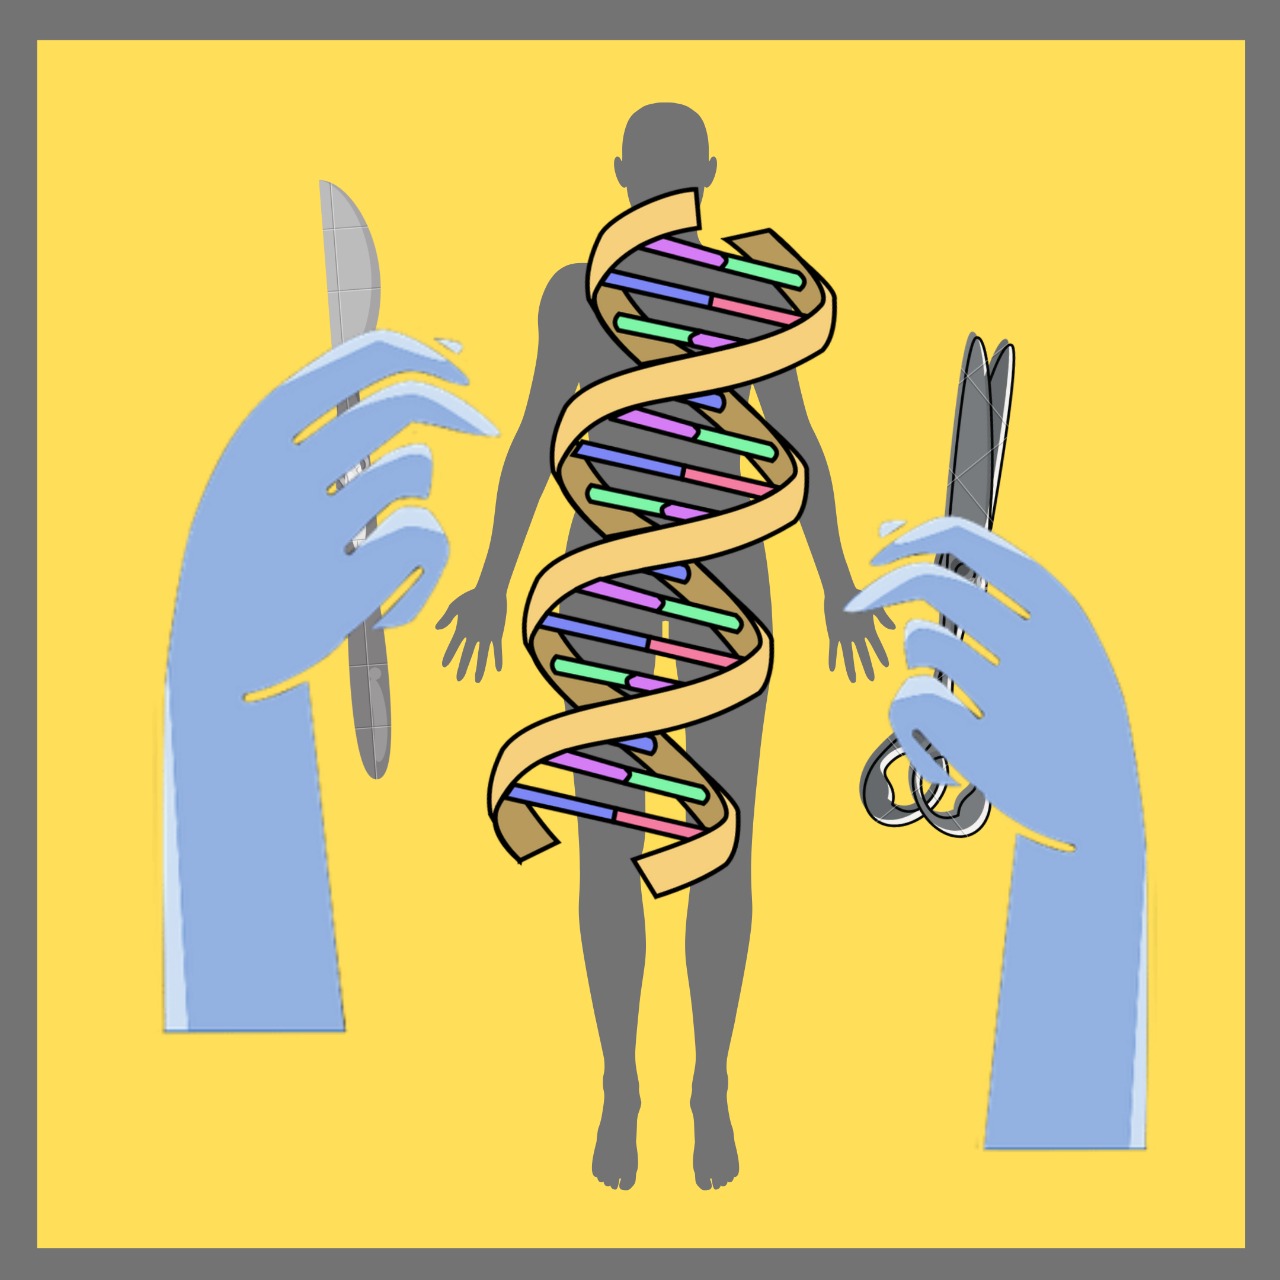 Jennifer Doudna: Biochemist and CRISPR pioneer